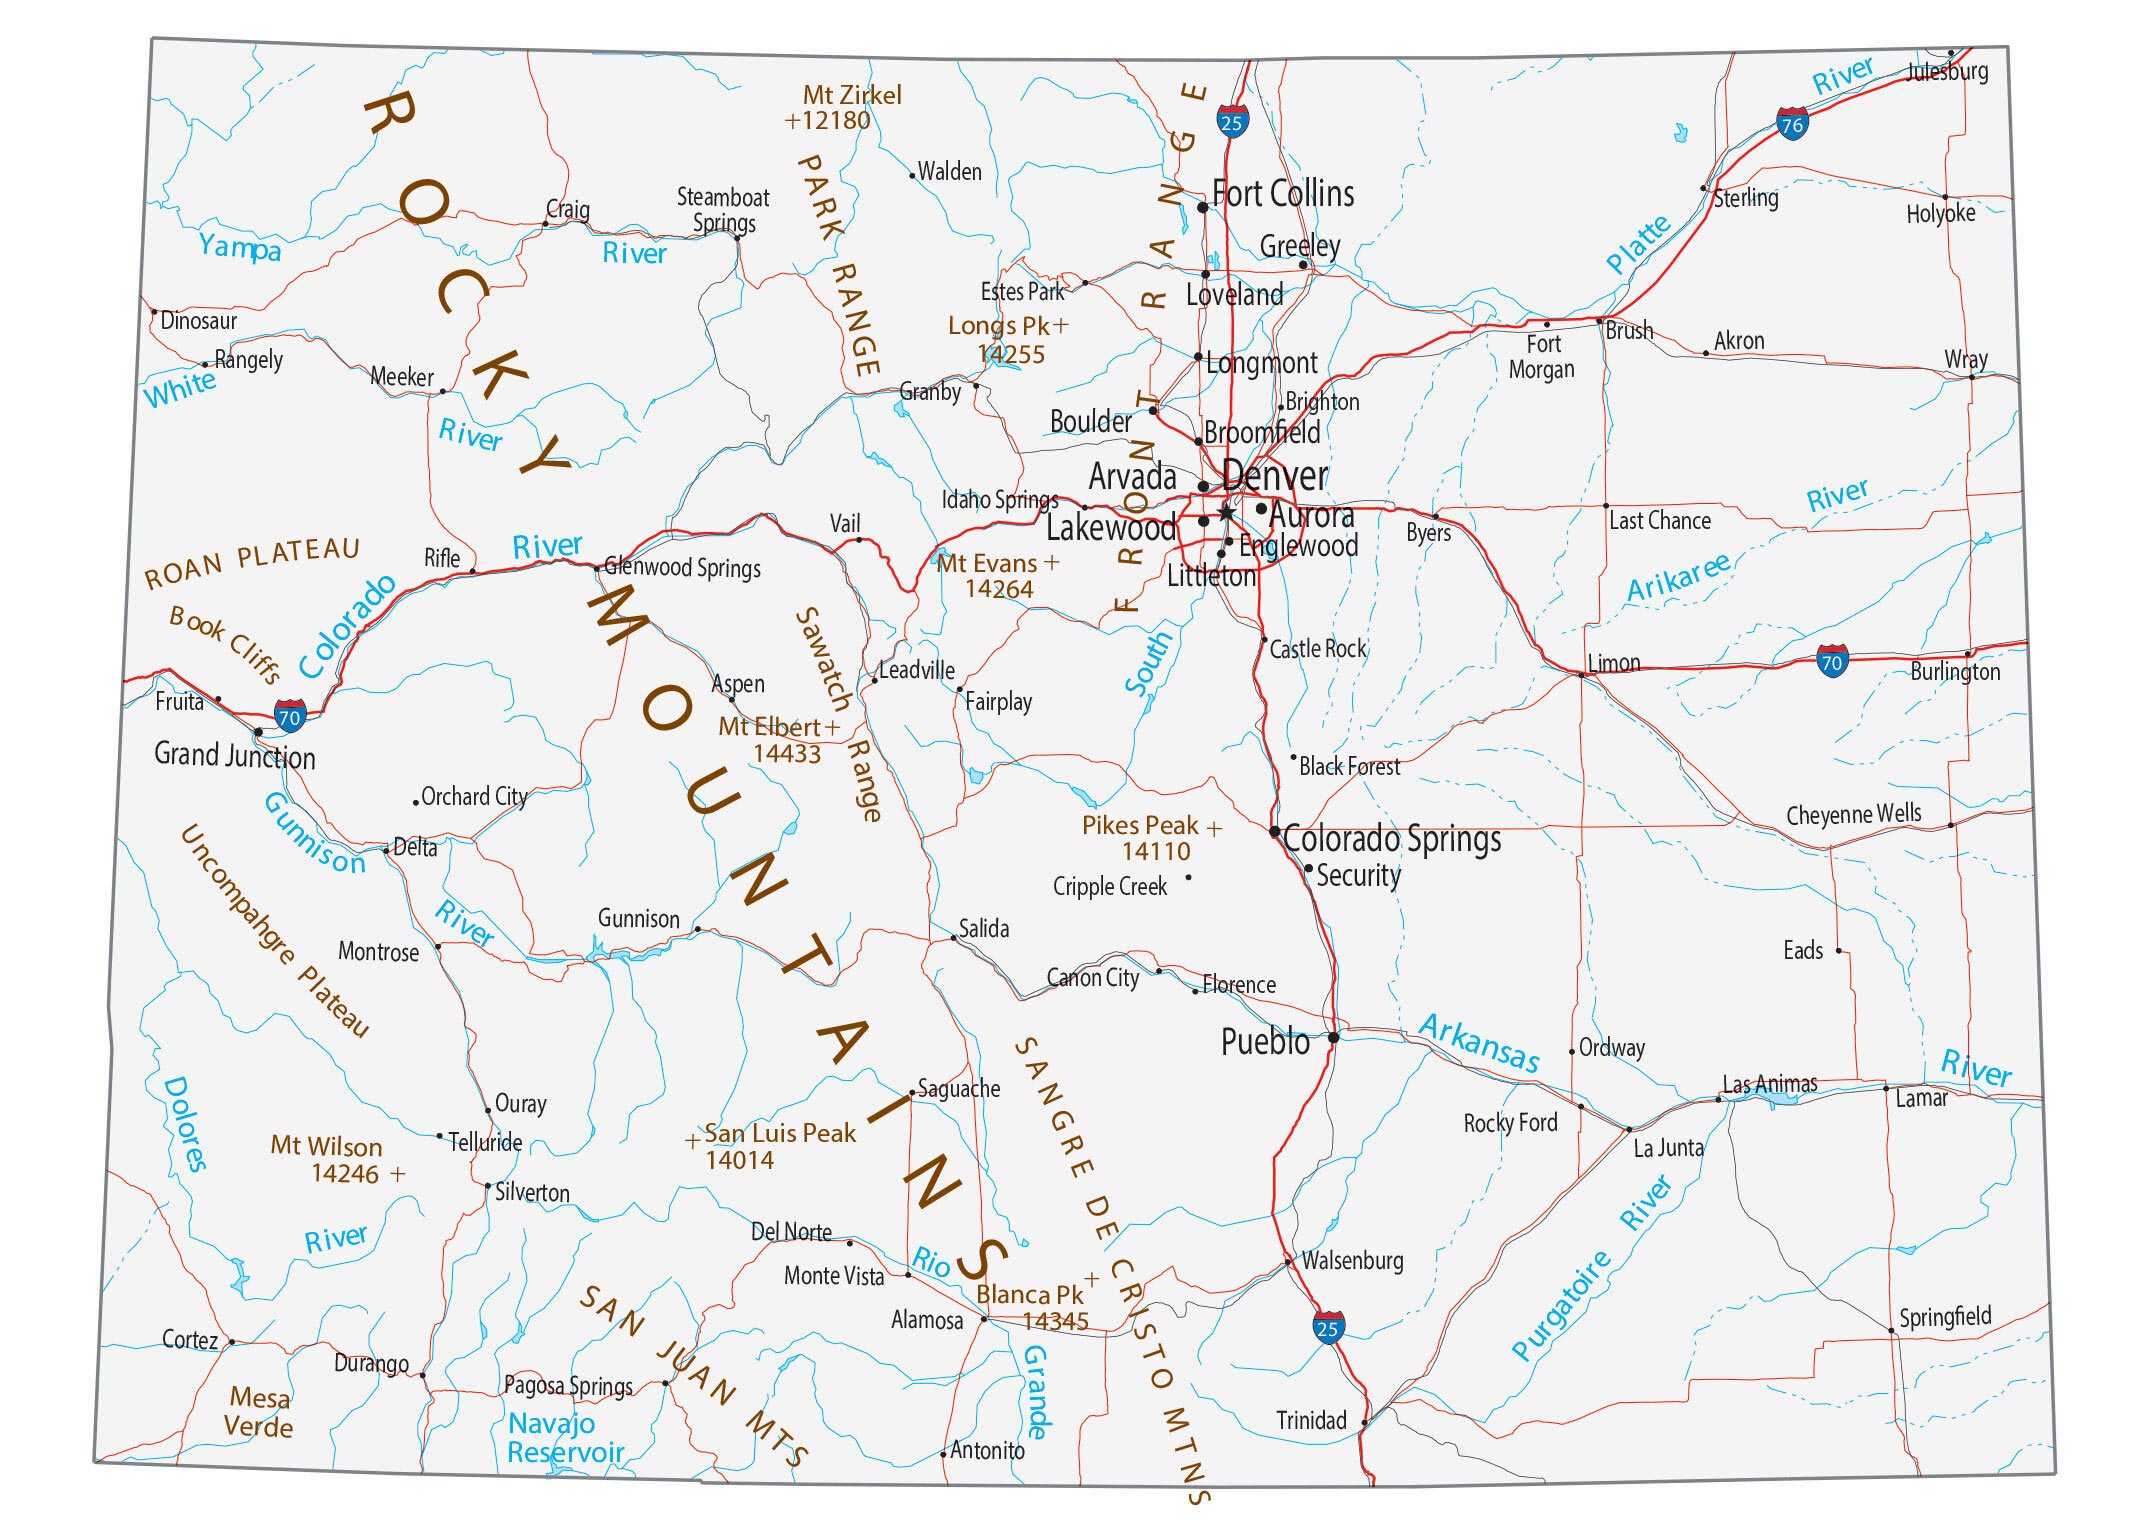 Las Animas County Gis Map Of Colorado - Cities And Roads - Gis Geography